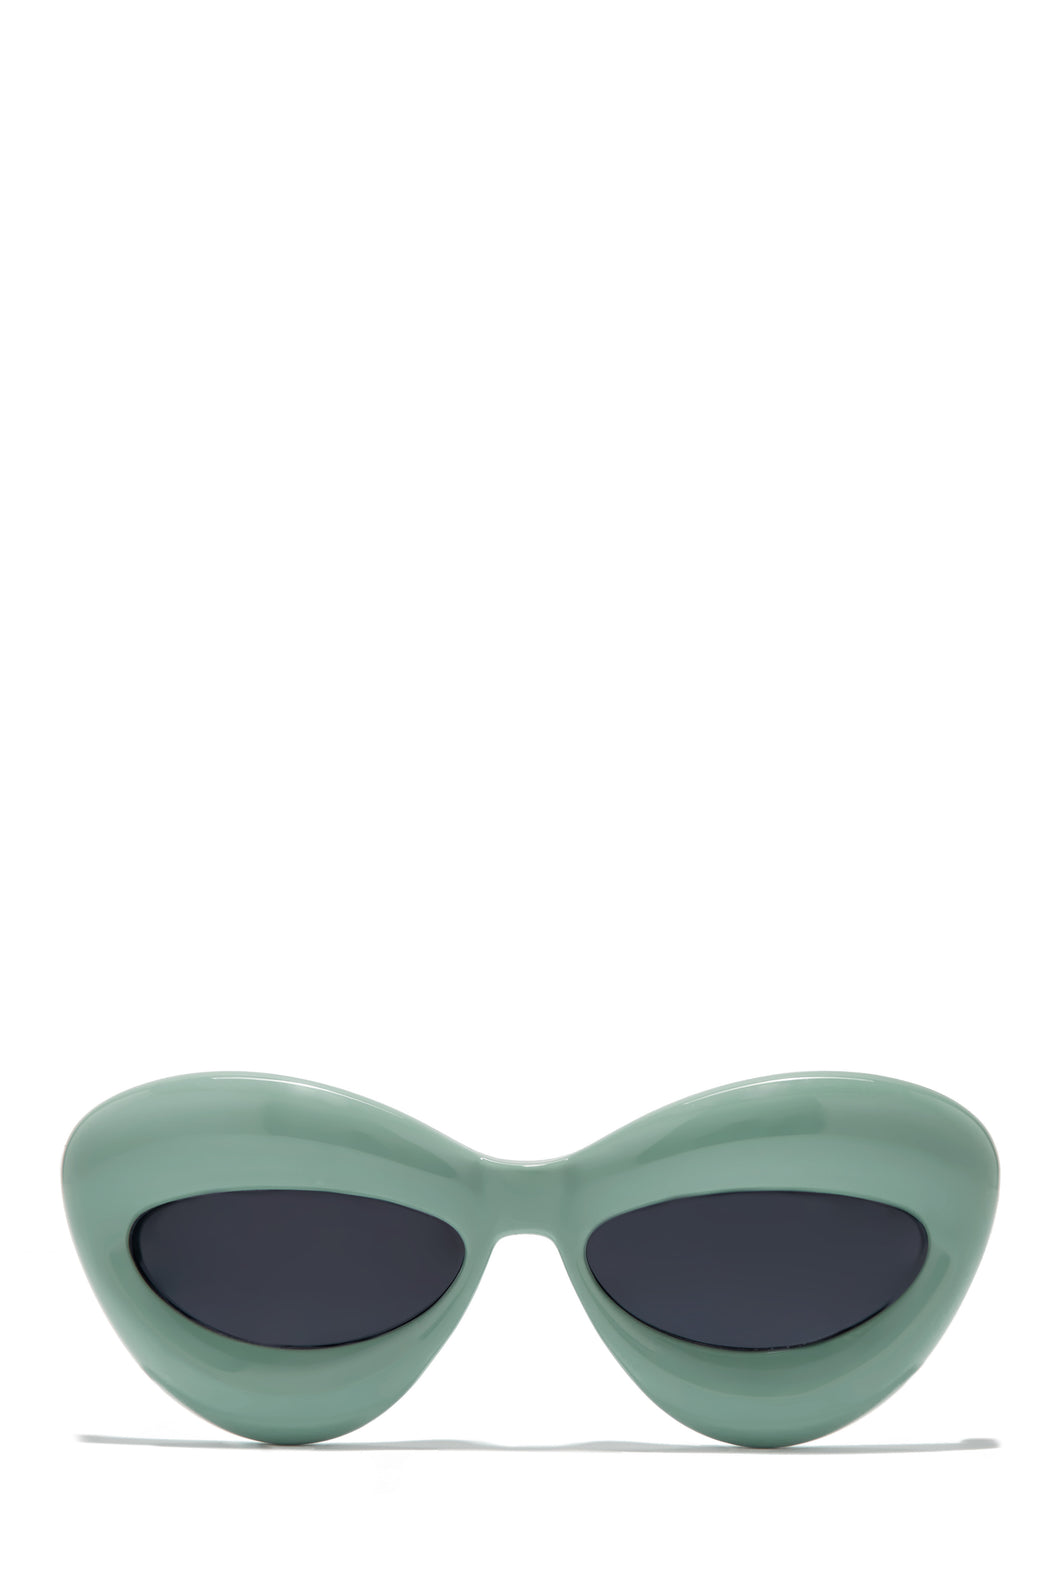 Mint Sage Sunglasses